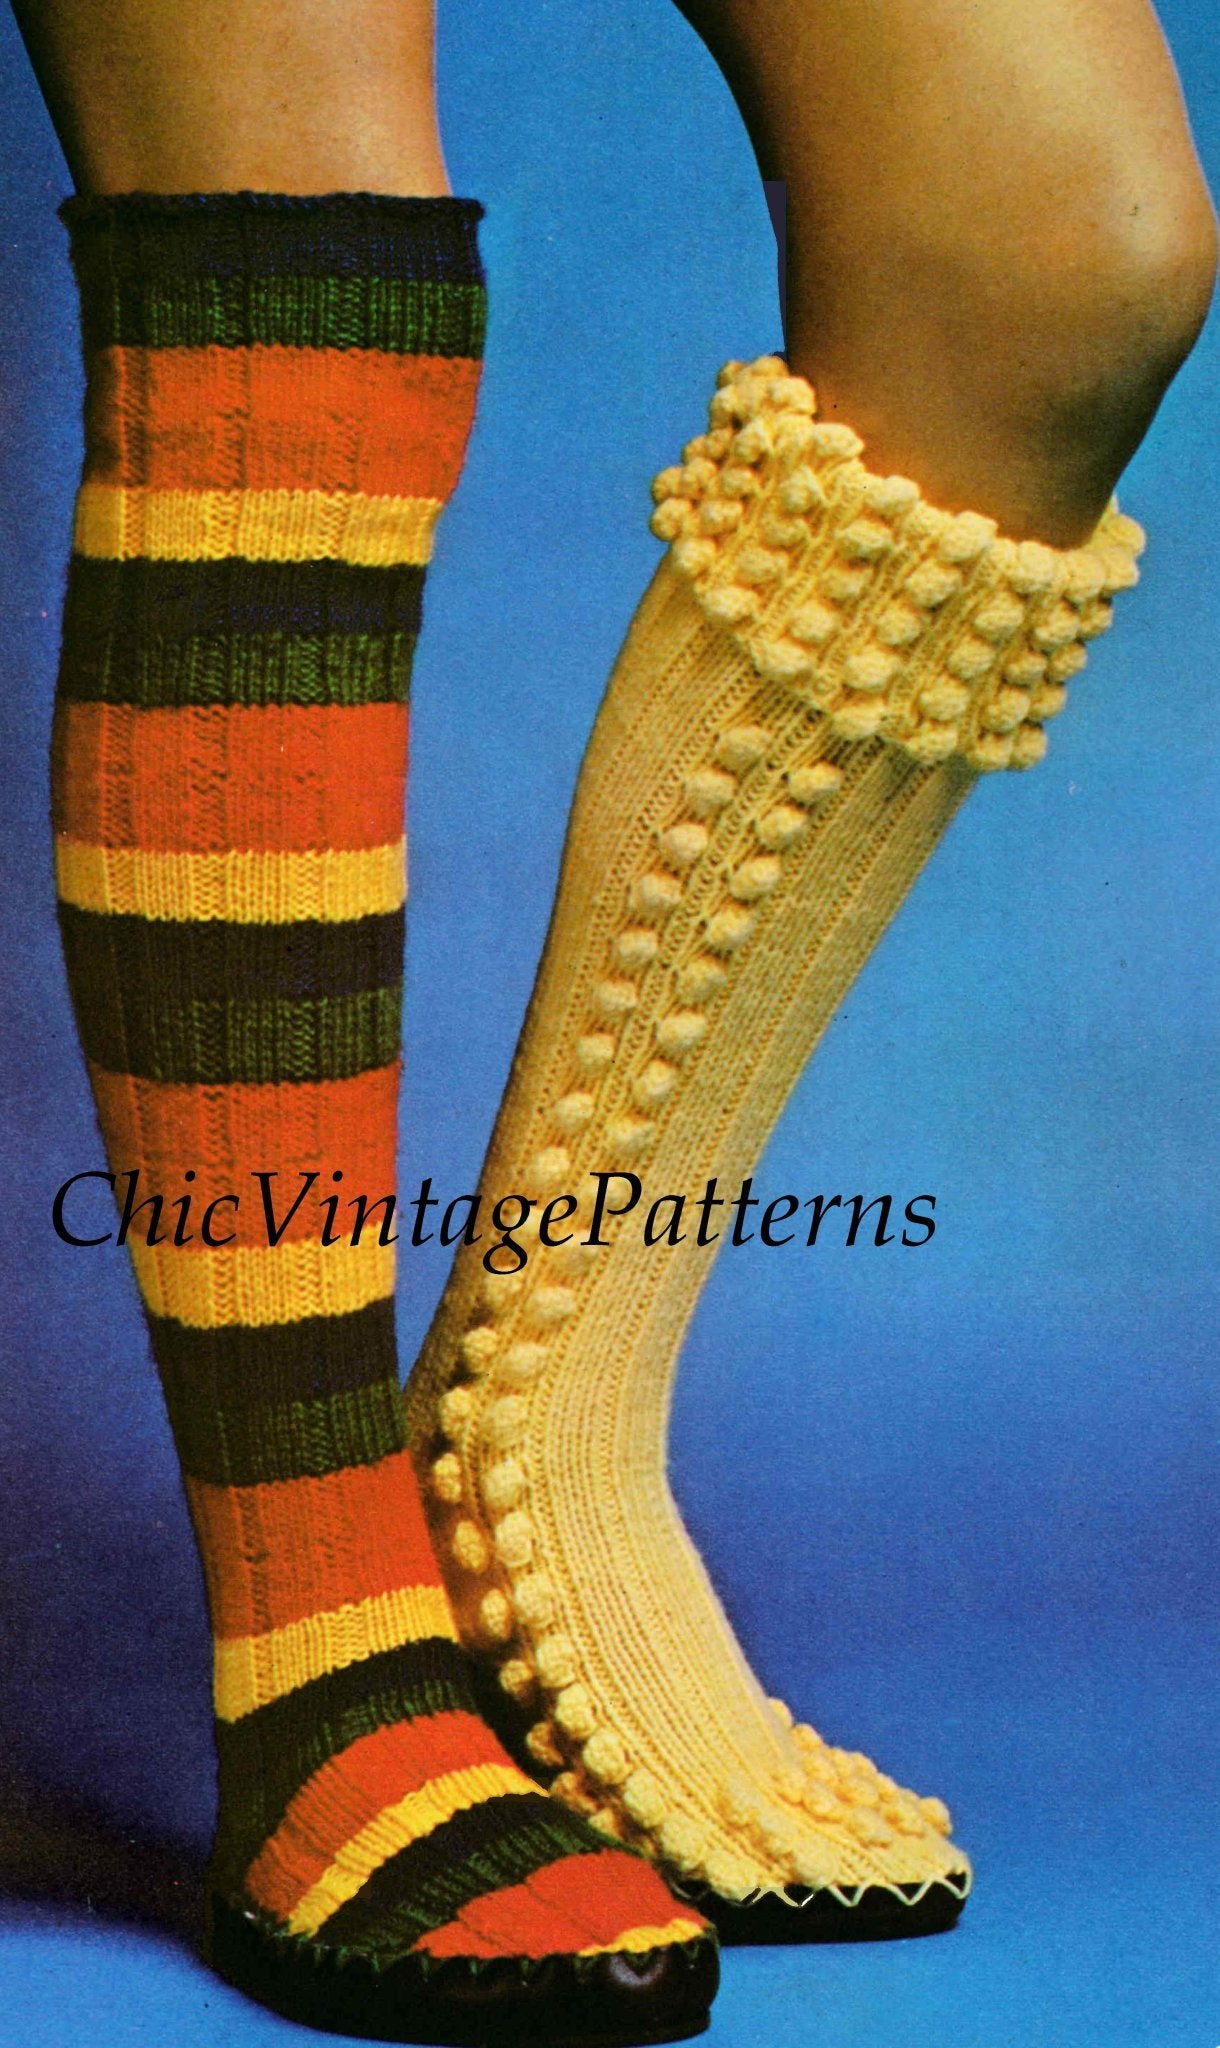 Ladies Knitted Slipper Socks Pattern, Two Styles, Digital Knitting Pattern